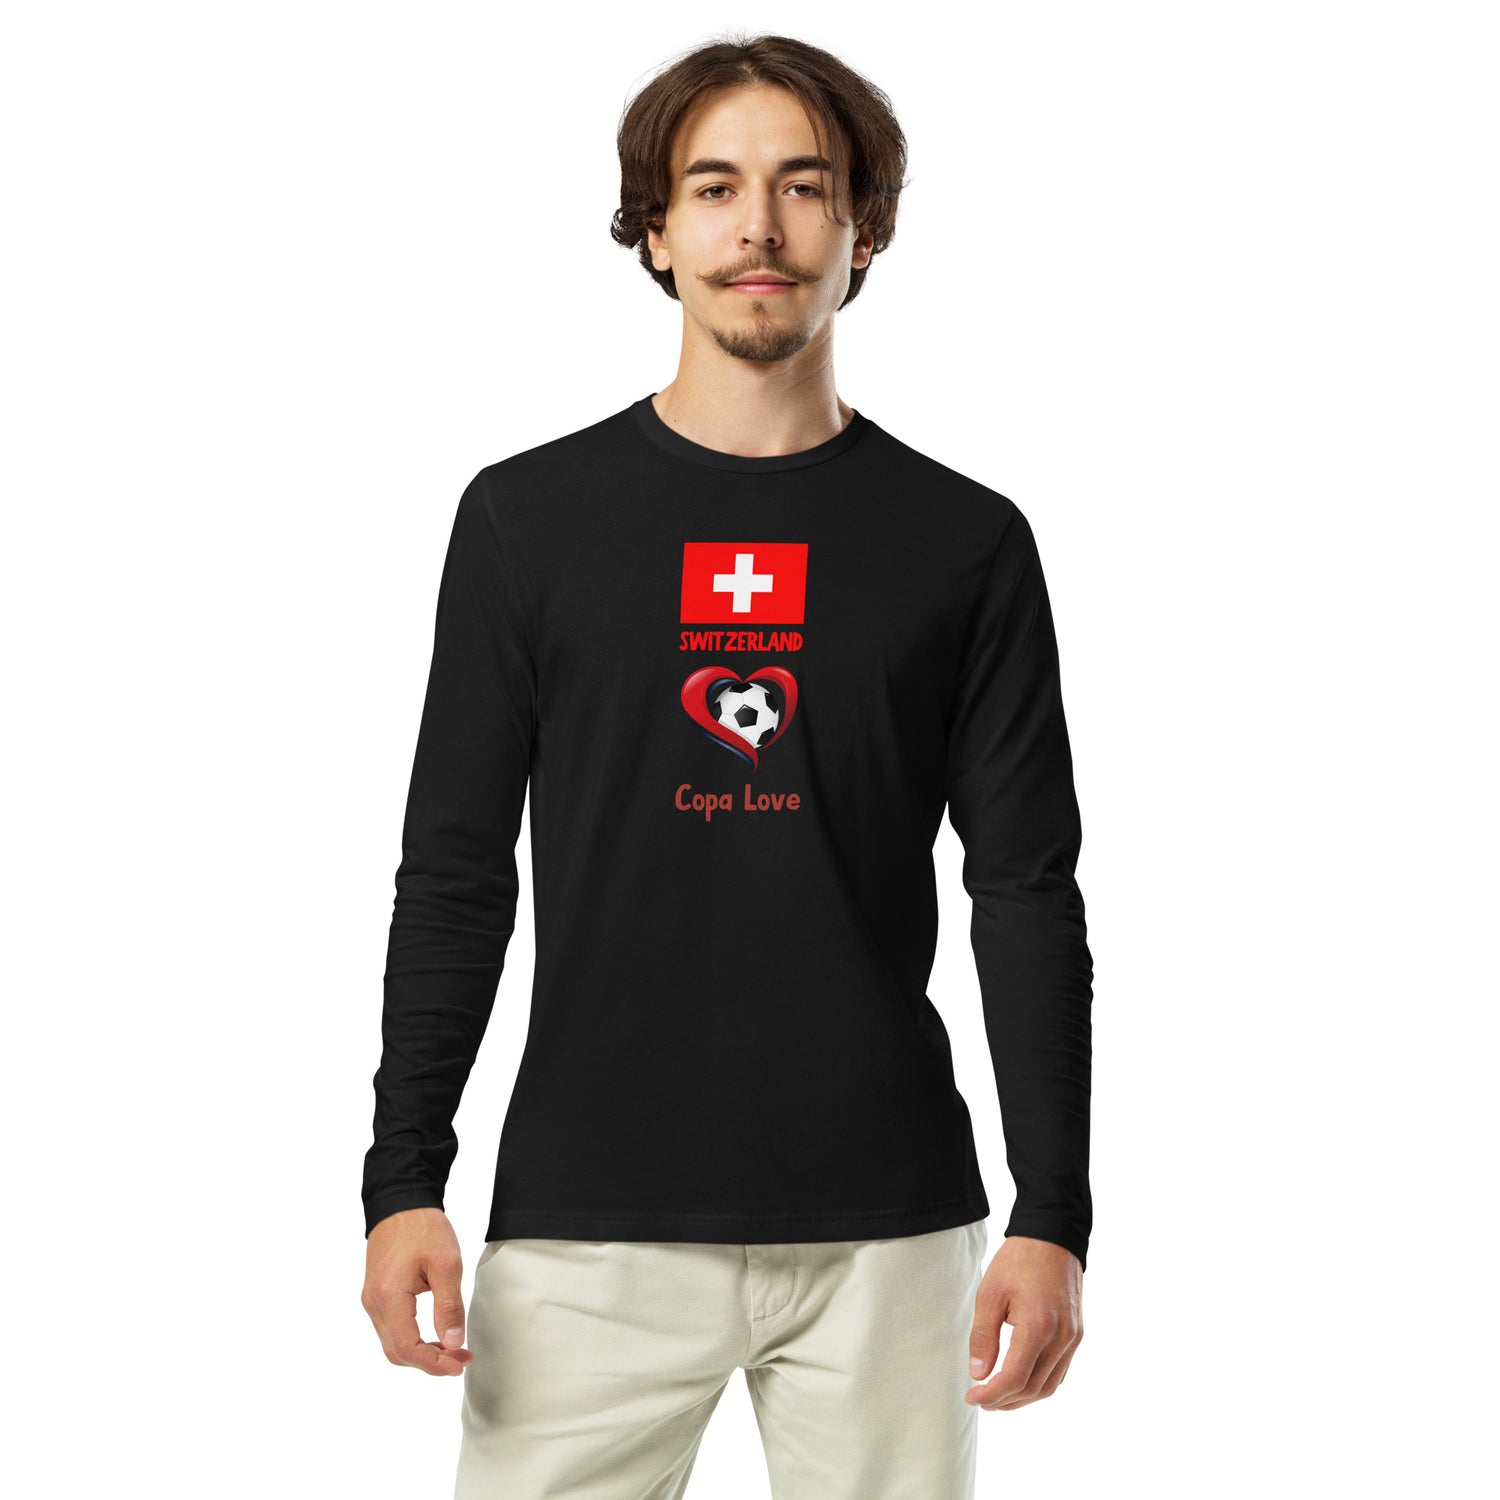 SWITZERLAND - Copa Love Premium Long Sleeve Fitted Crew Shirt